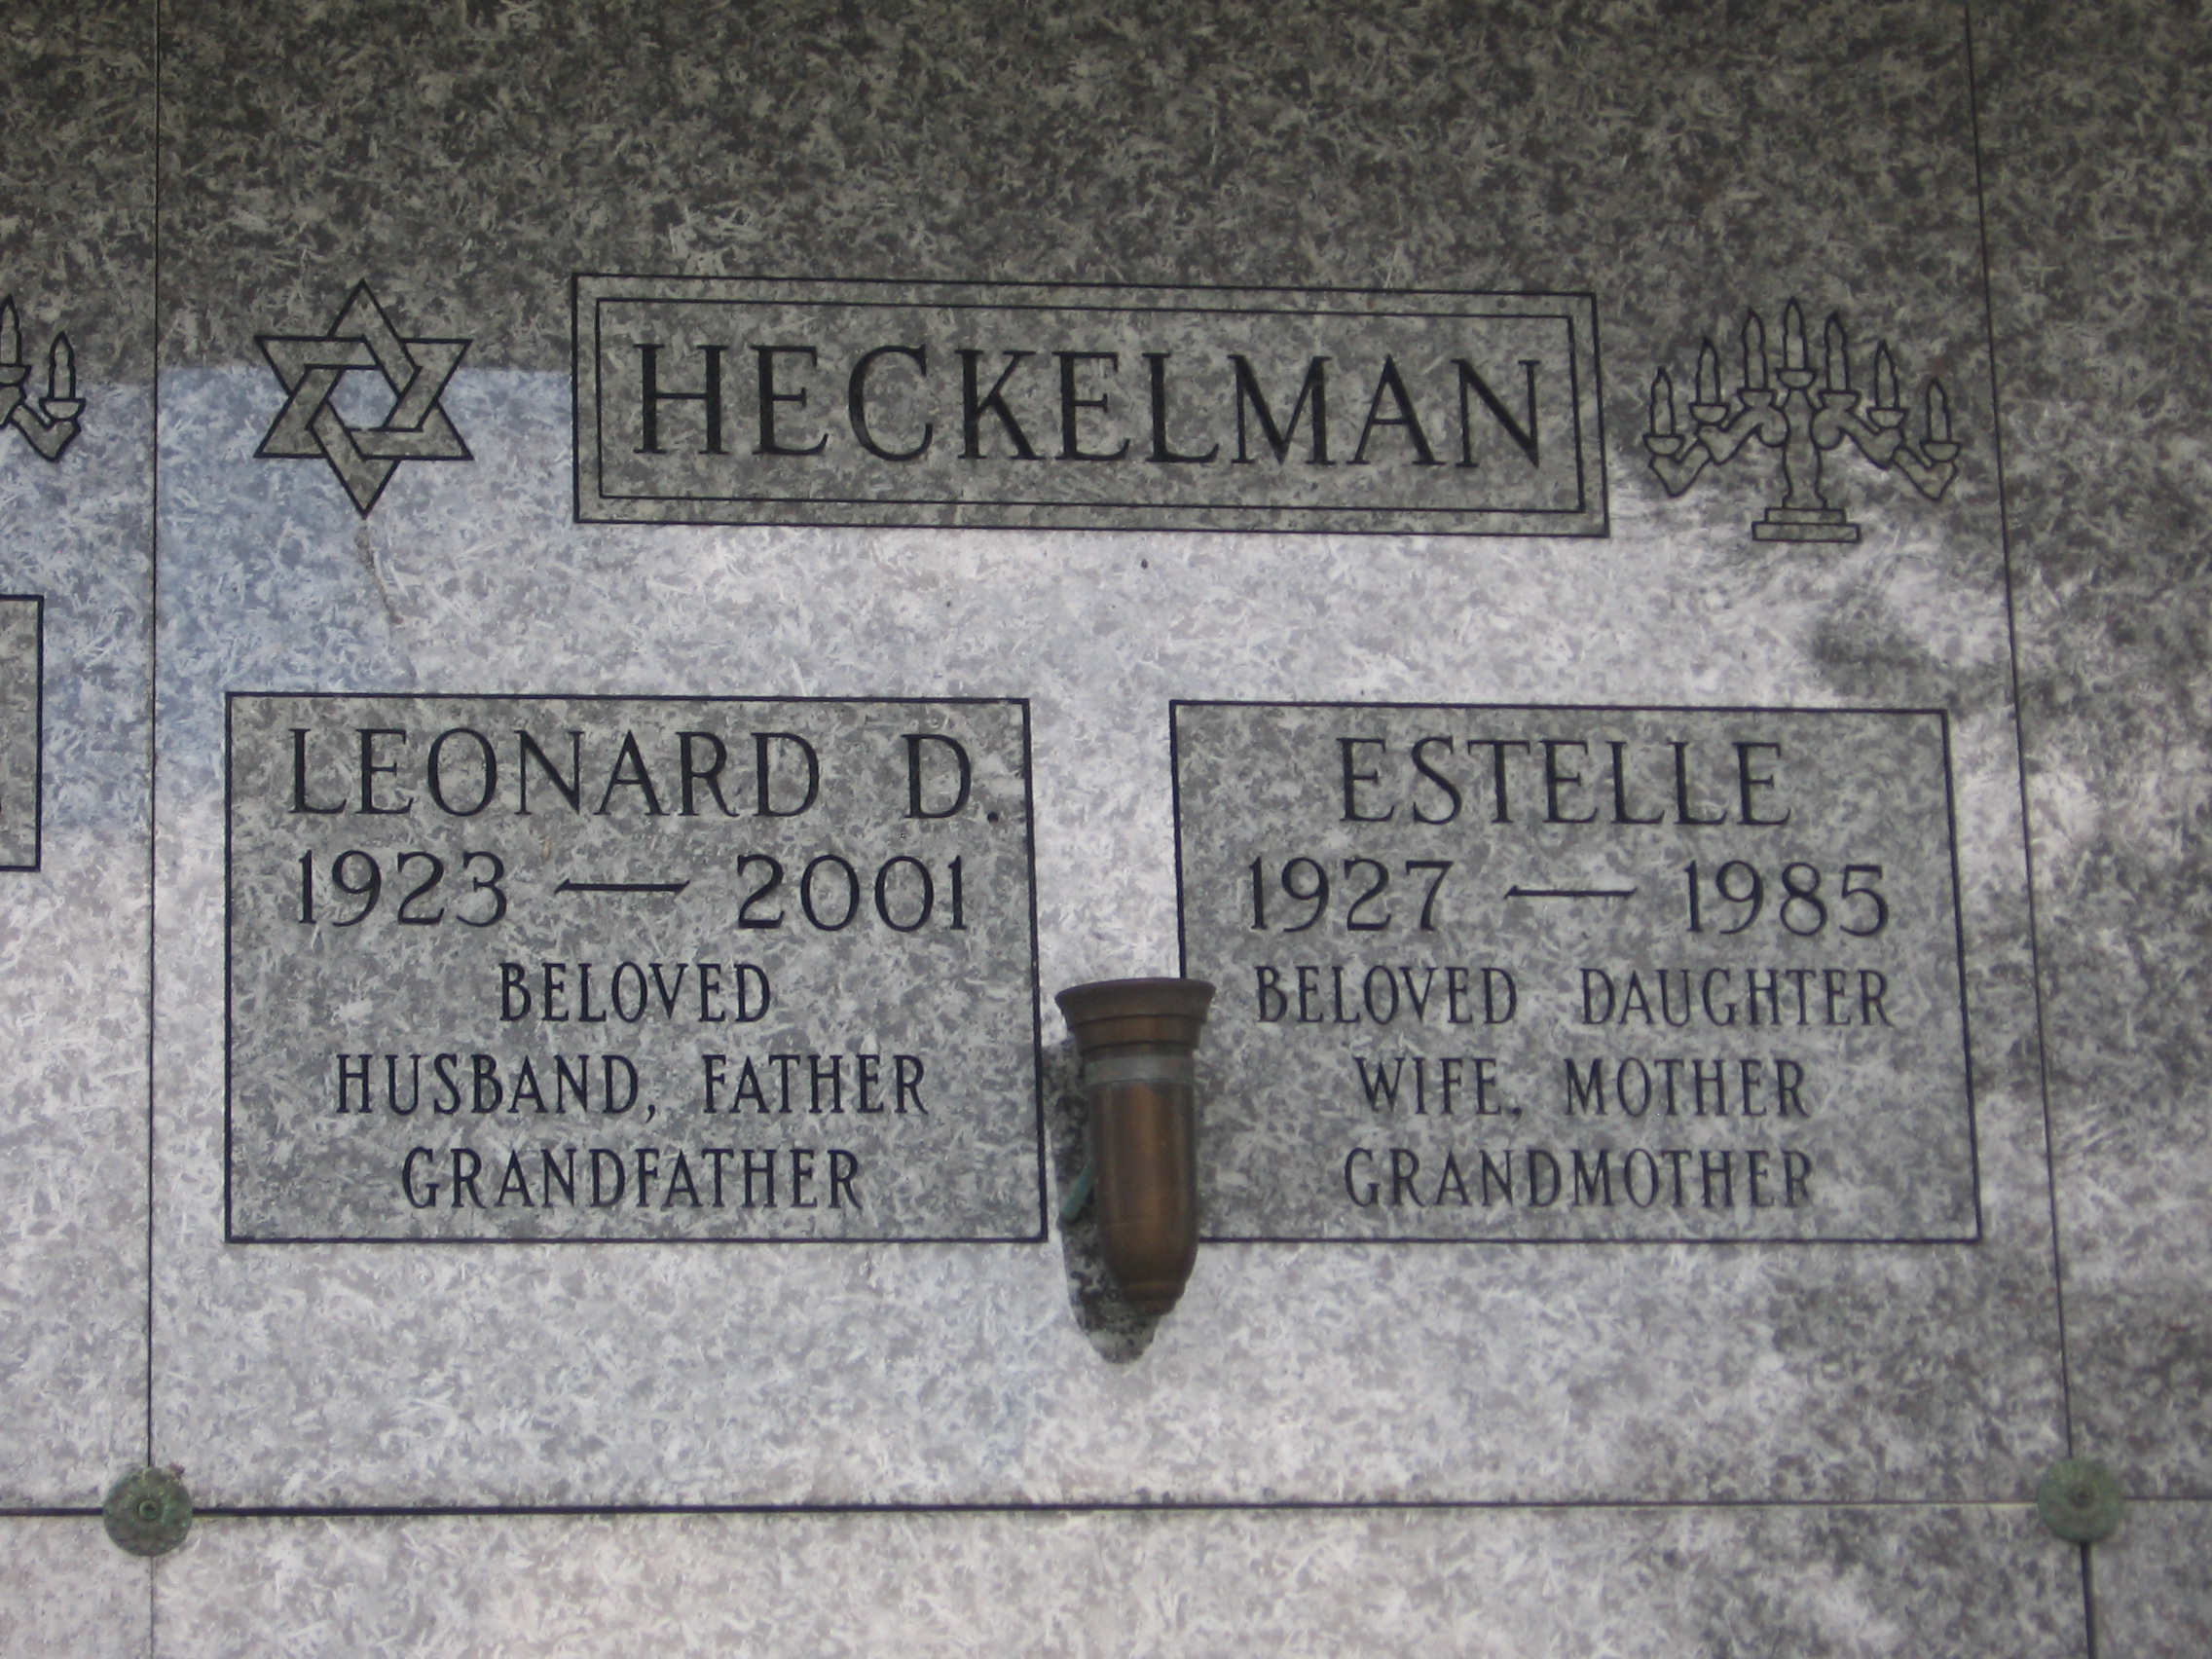 Leonard D Heckelman